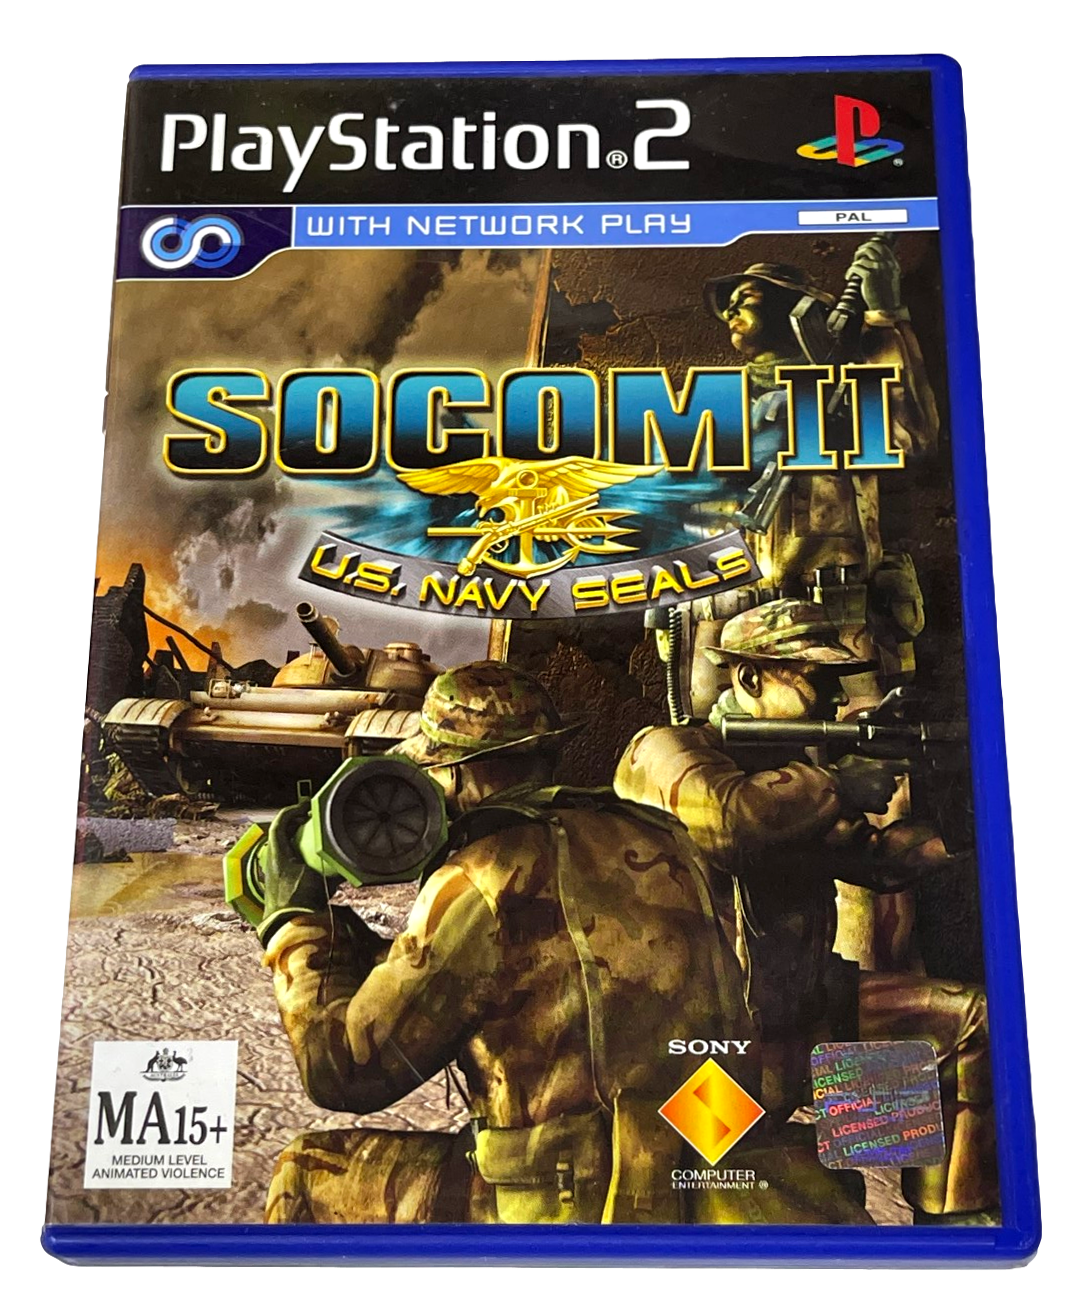 #5 SOCOM U.S NAVY SEALS (FireTeam Bravo 2) - GREATEST HITS (Sony PSP) - NEW  ™ 711719864523 